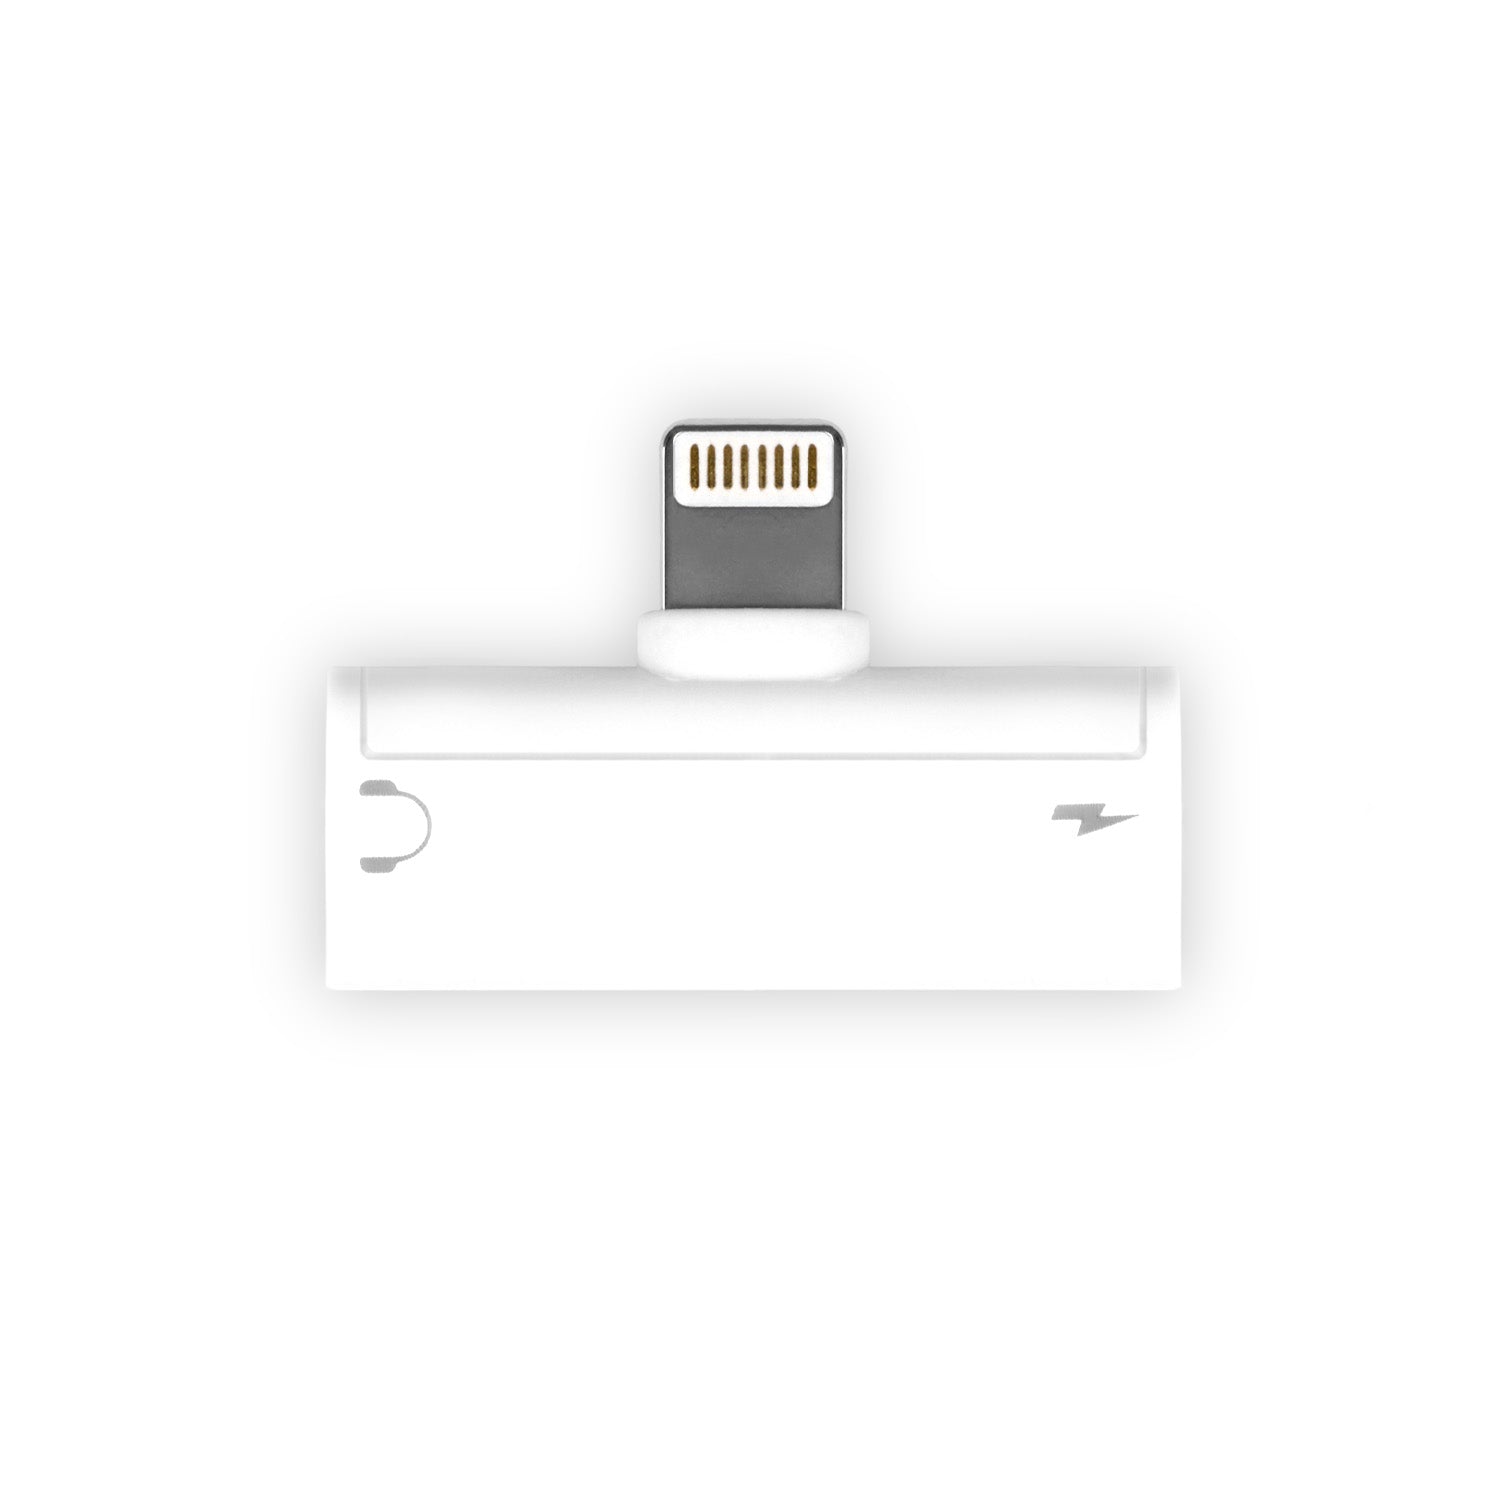 Lightning + 3.5 mm Adapter for iPhone/iPad